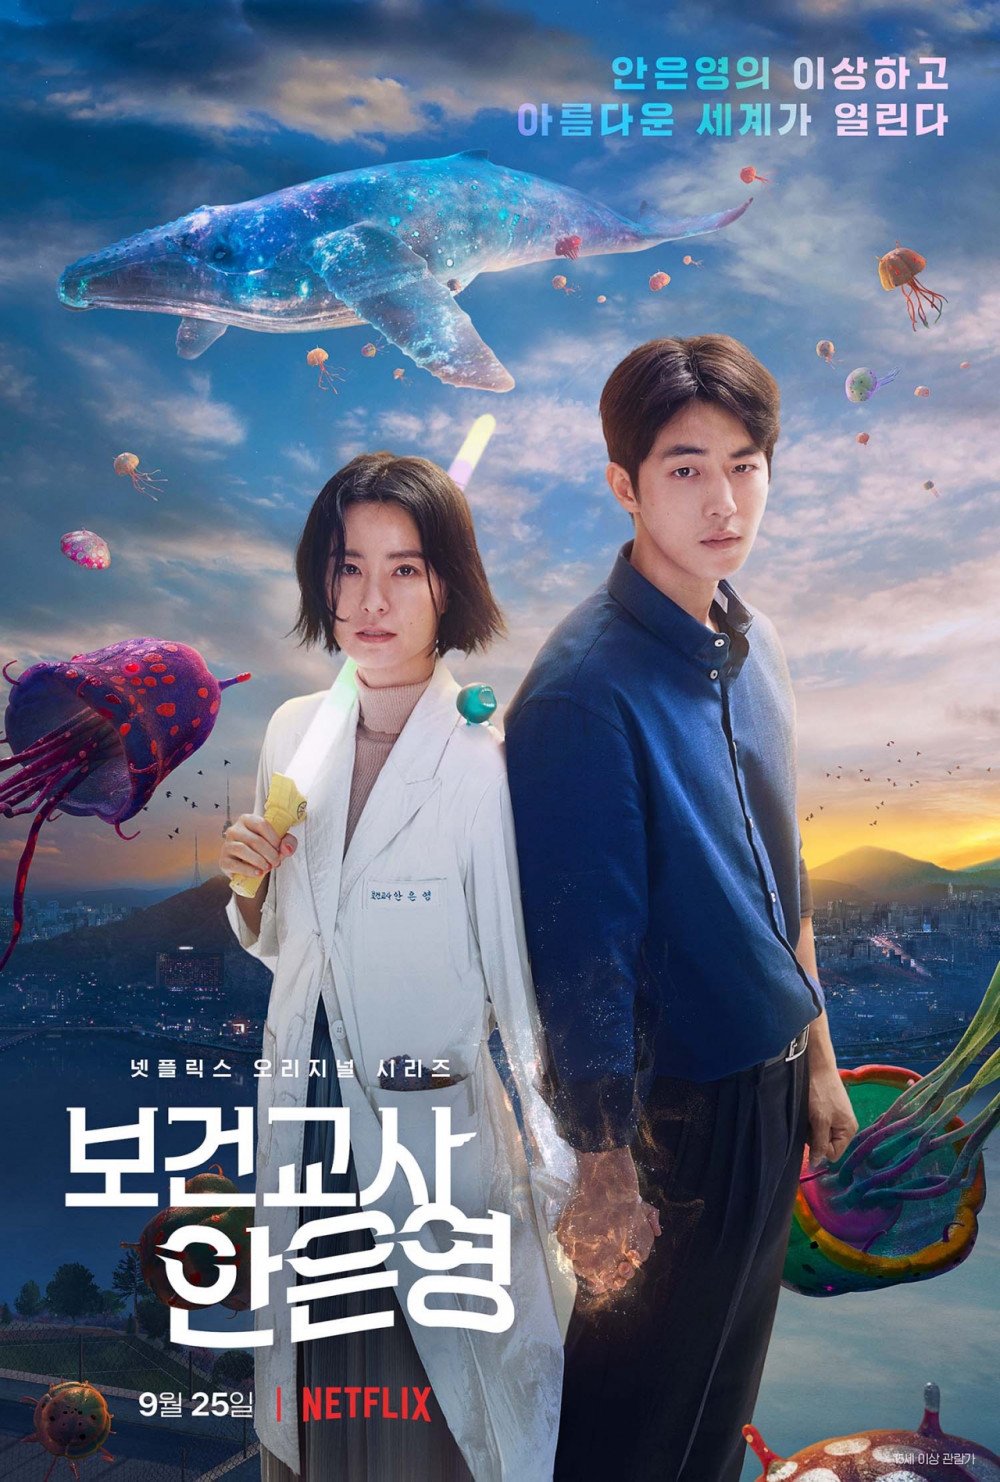 11 Drama Korea terbaik kisah kehidupan sekolah, ungkap rahasia remaja